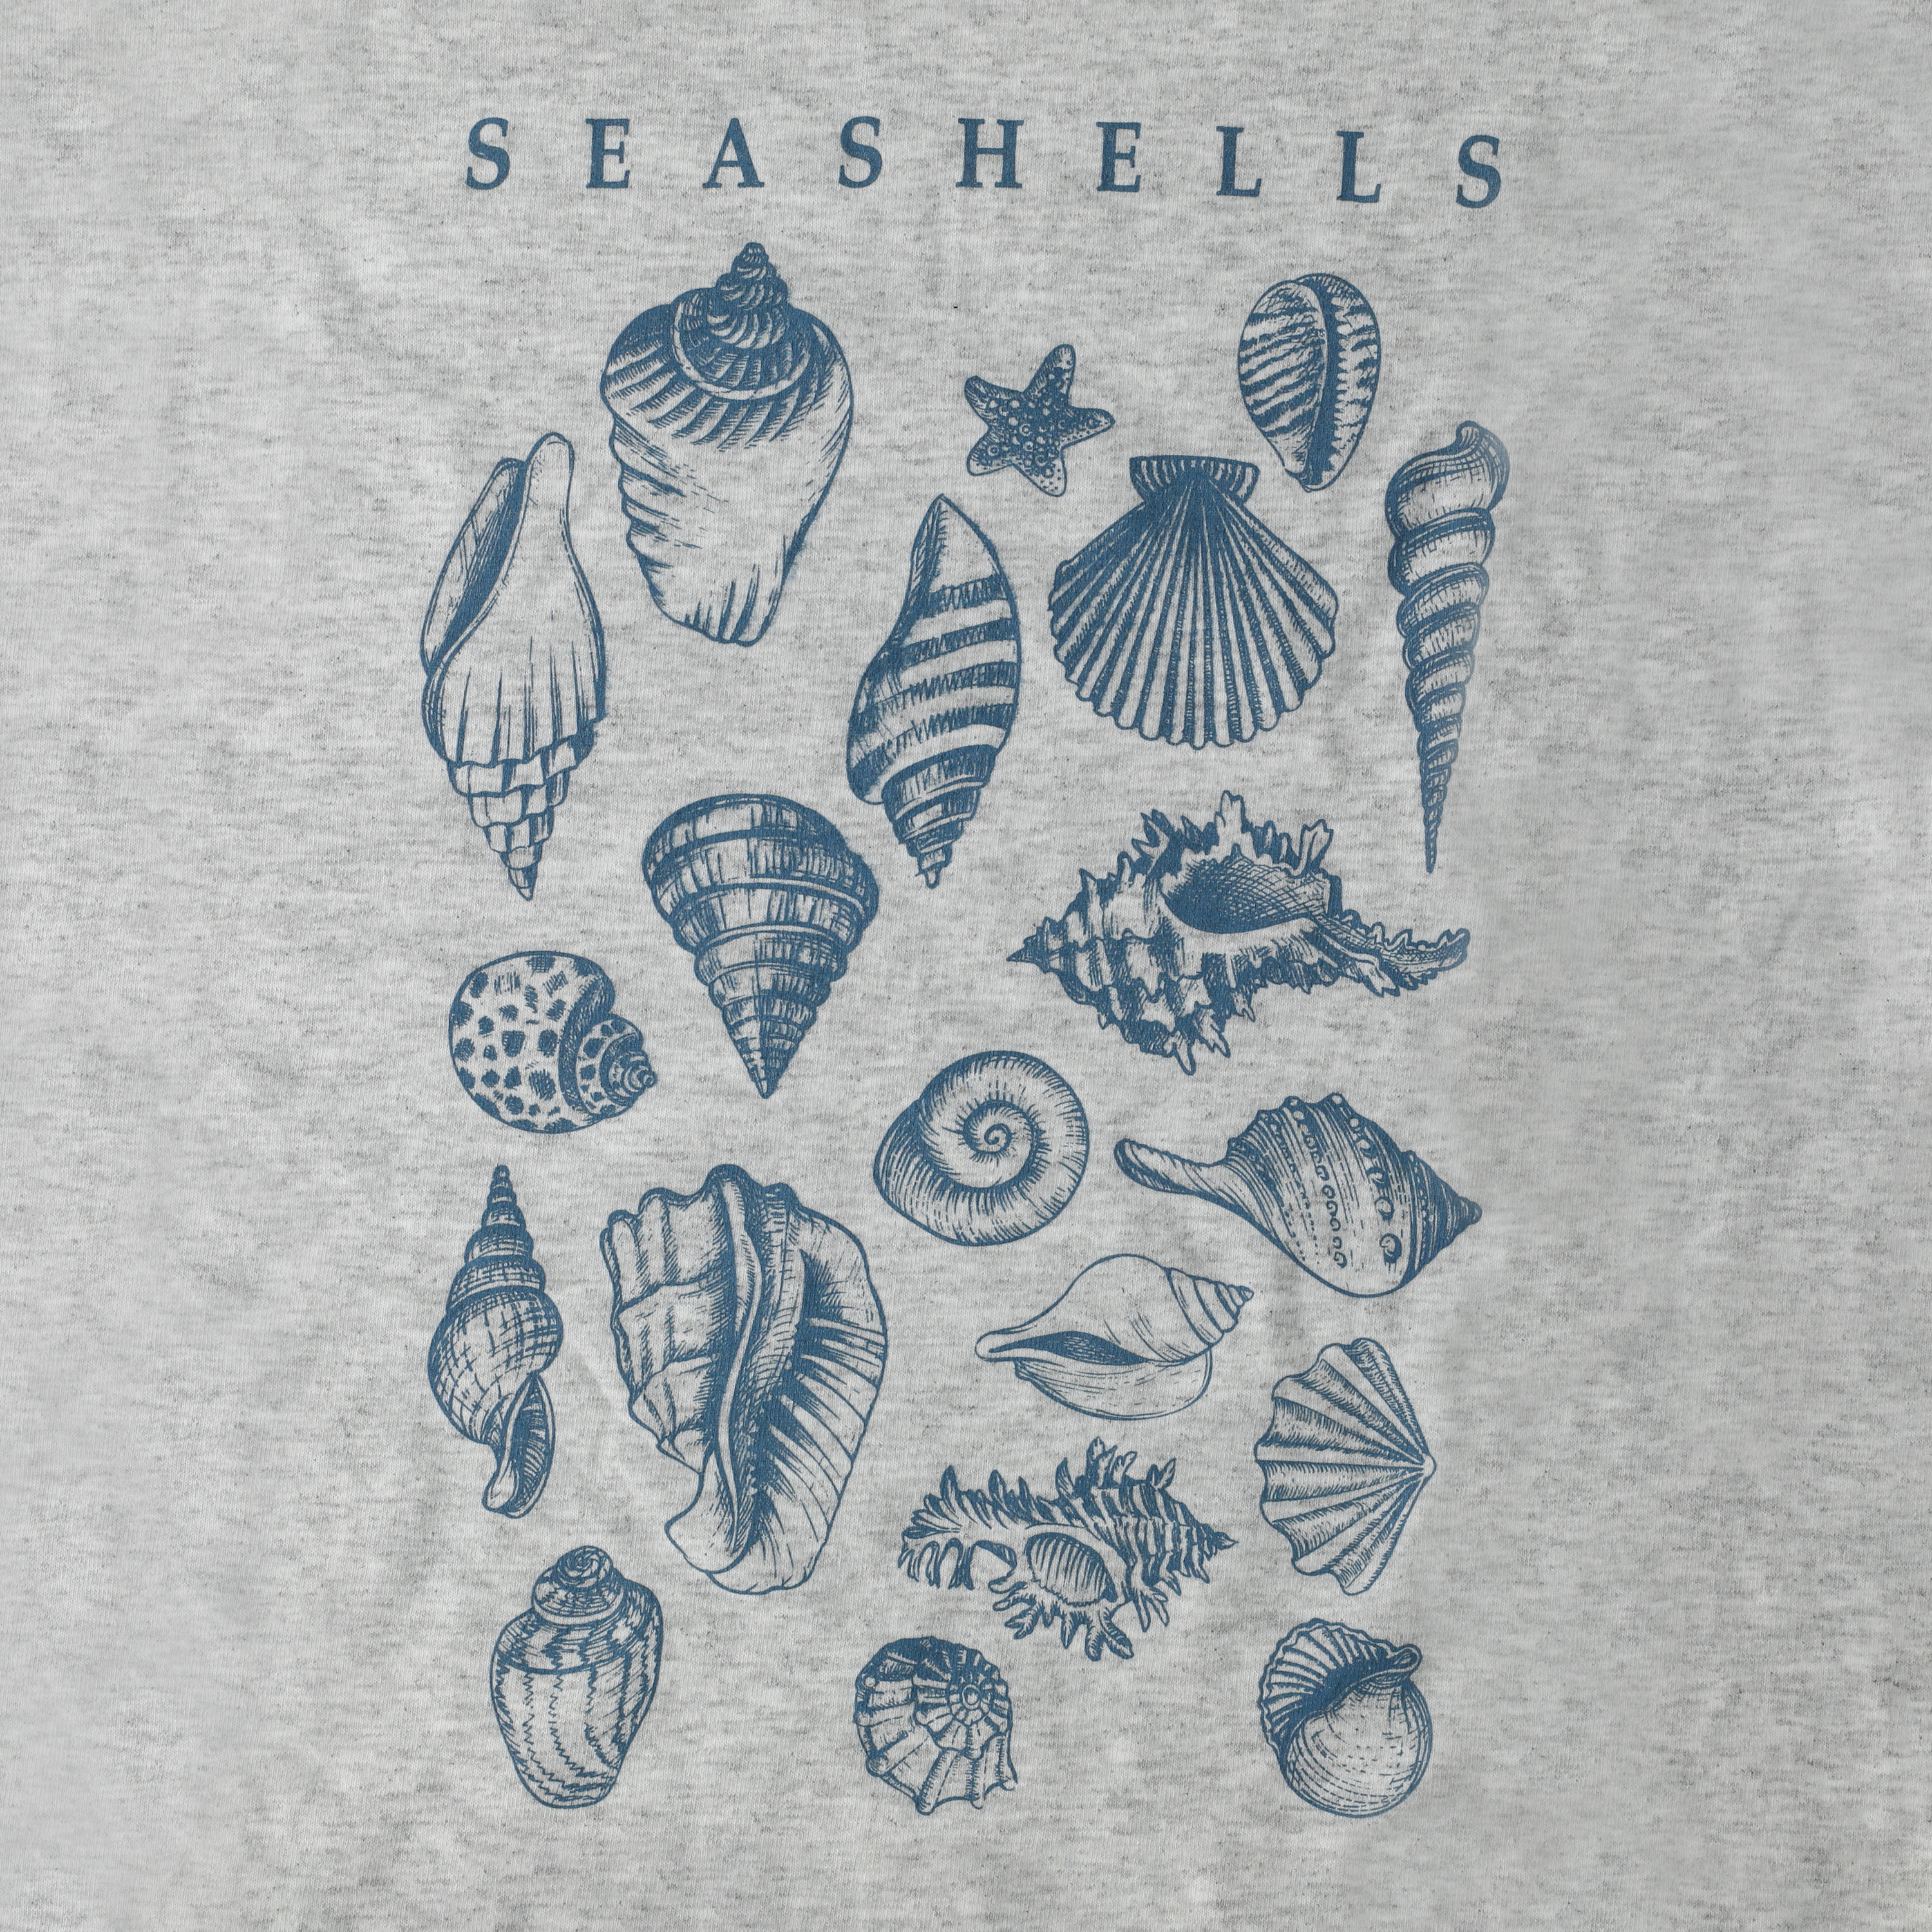 'Seashells' Graphic Tee